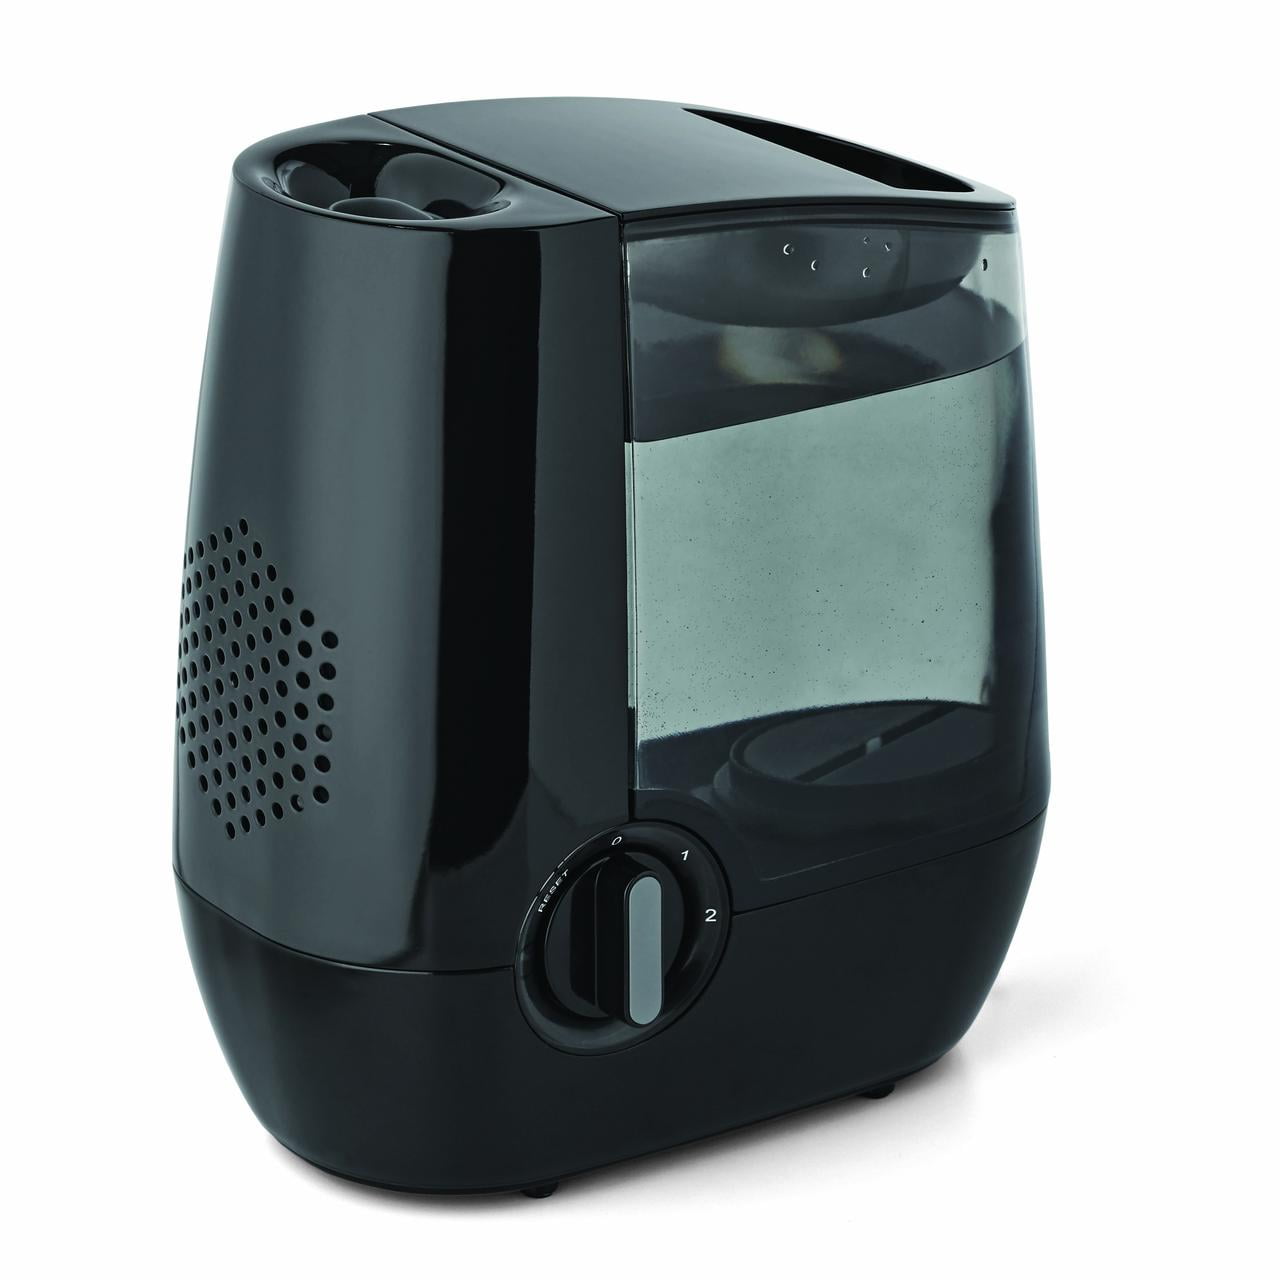 Mainstays Warm Mist Humidifier, Filter-Free, 1.2 Gallon, Visible Mist, Black